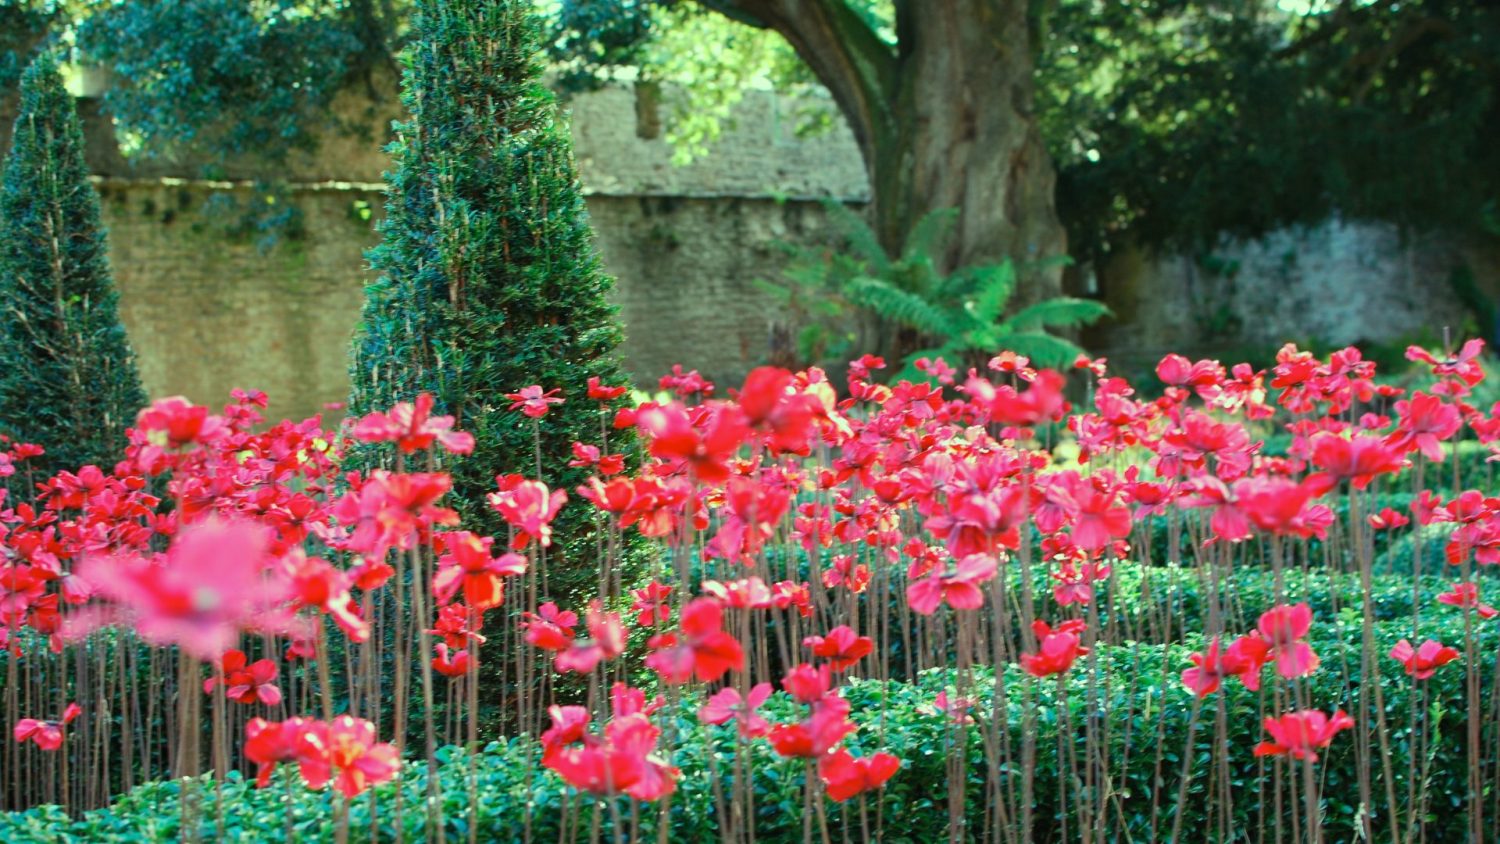 Somerset Poppies at The Bishop's Palace